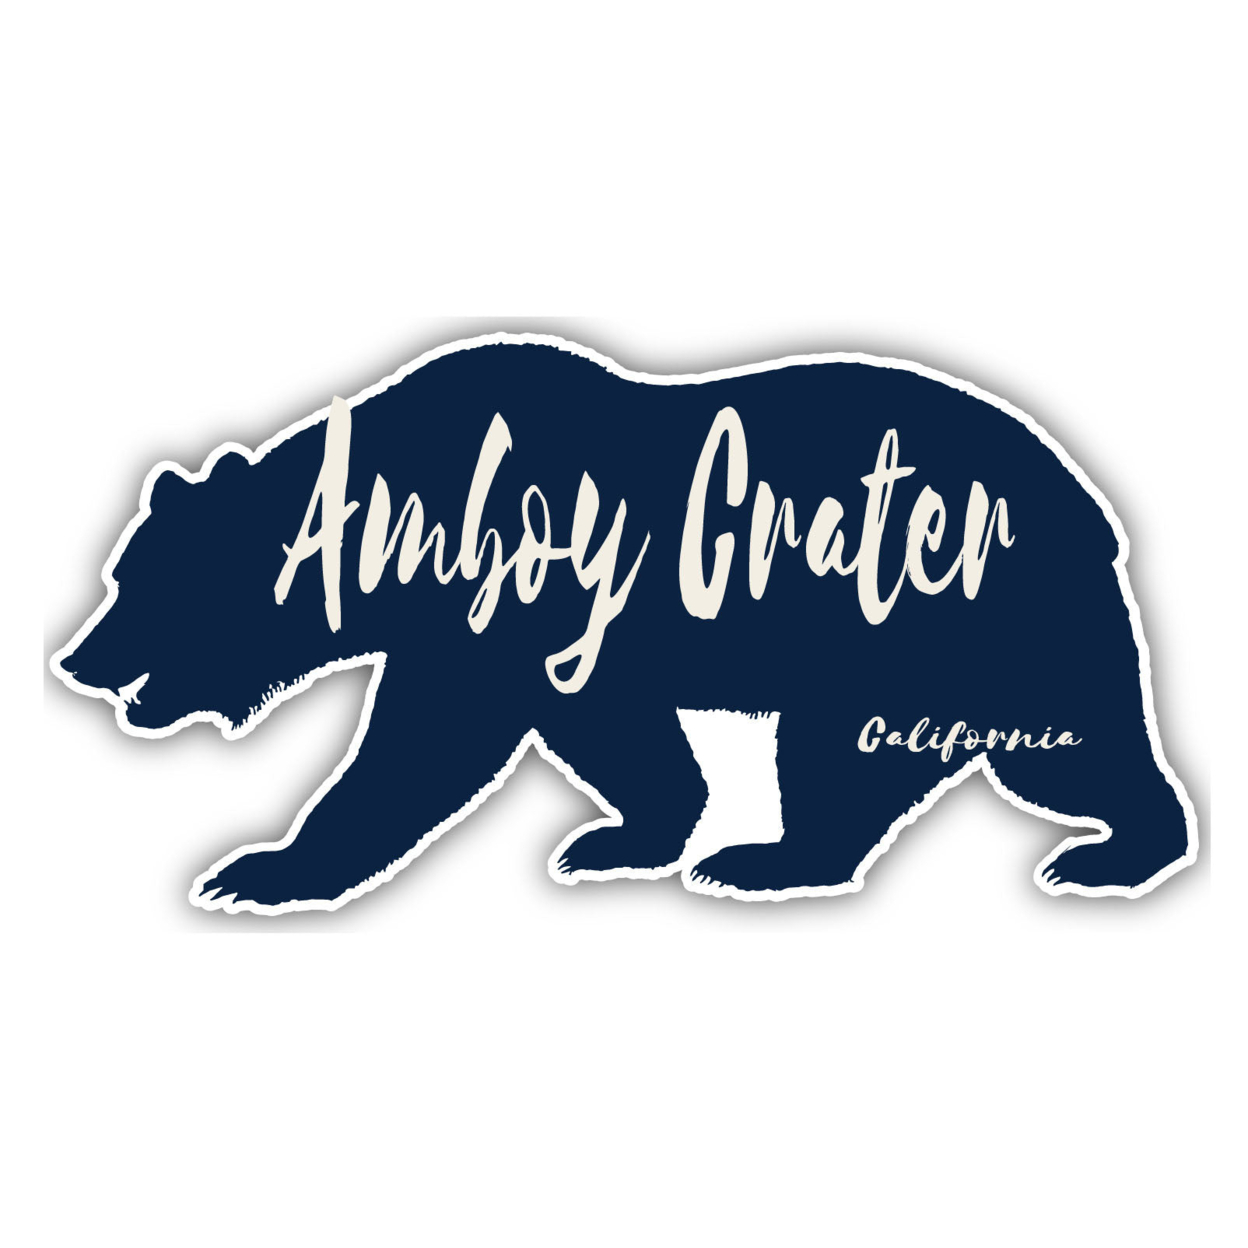 Amboy Crater California Souvenir Decorative Stickers (Choose Theme And Size) - Single Unit, 6-Inch, Bear